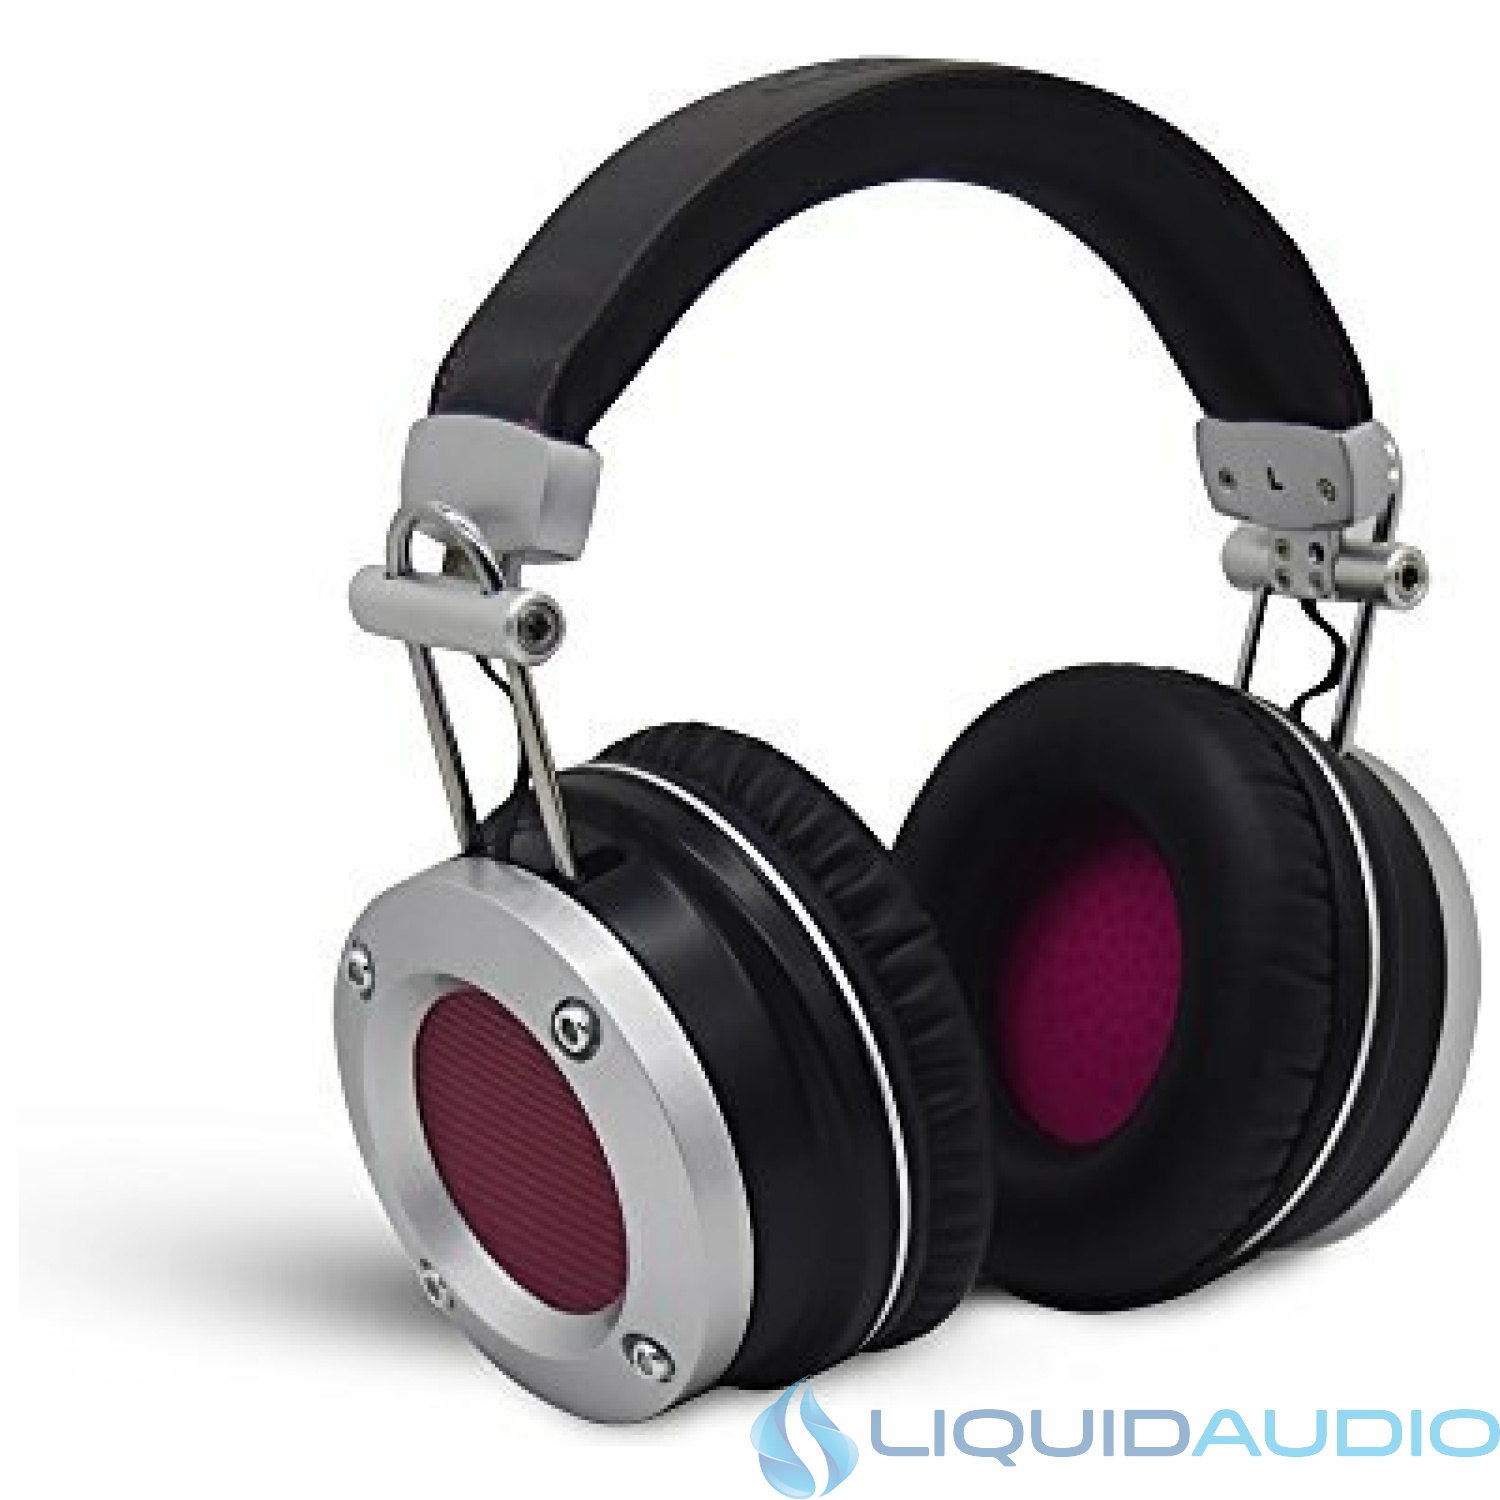 Avantone Pro MP-1 Mixphone Multi-mode Reference Headphones with Vari-Voice - Black